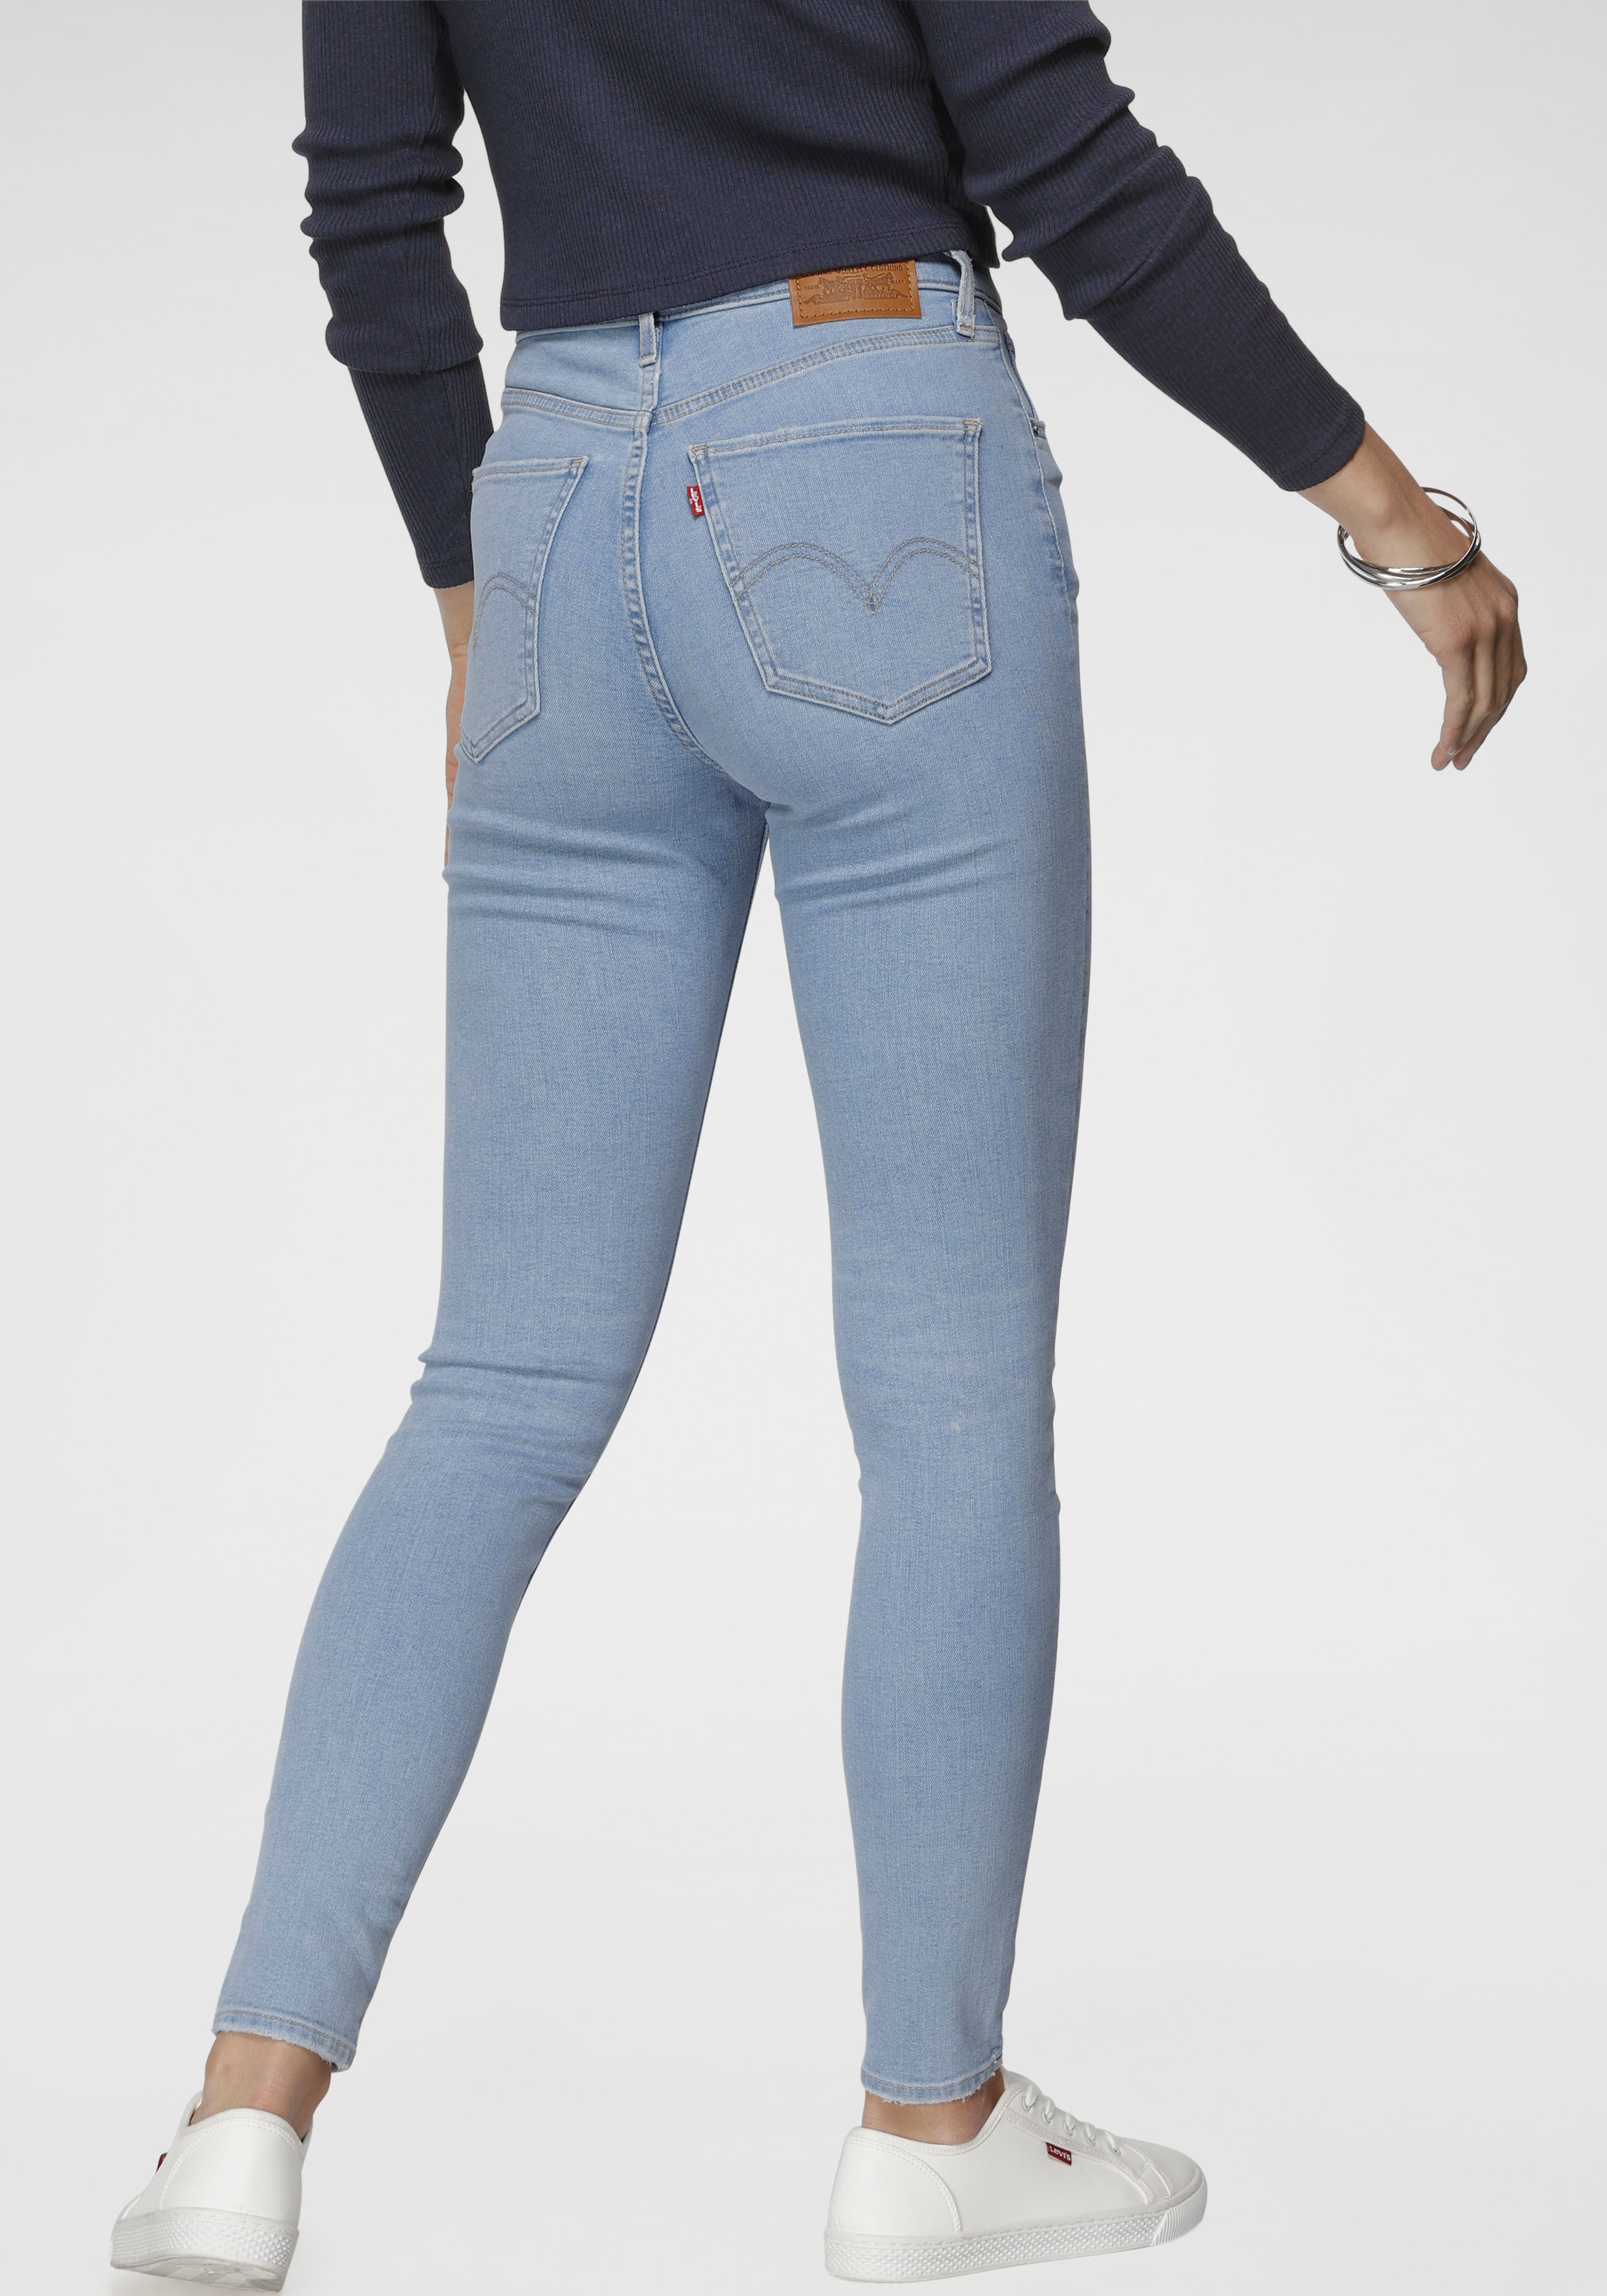 D9F1e Abbigliamento LEVIS Jeans MILE HIGH Super Skinny in Blu 